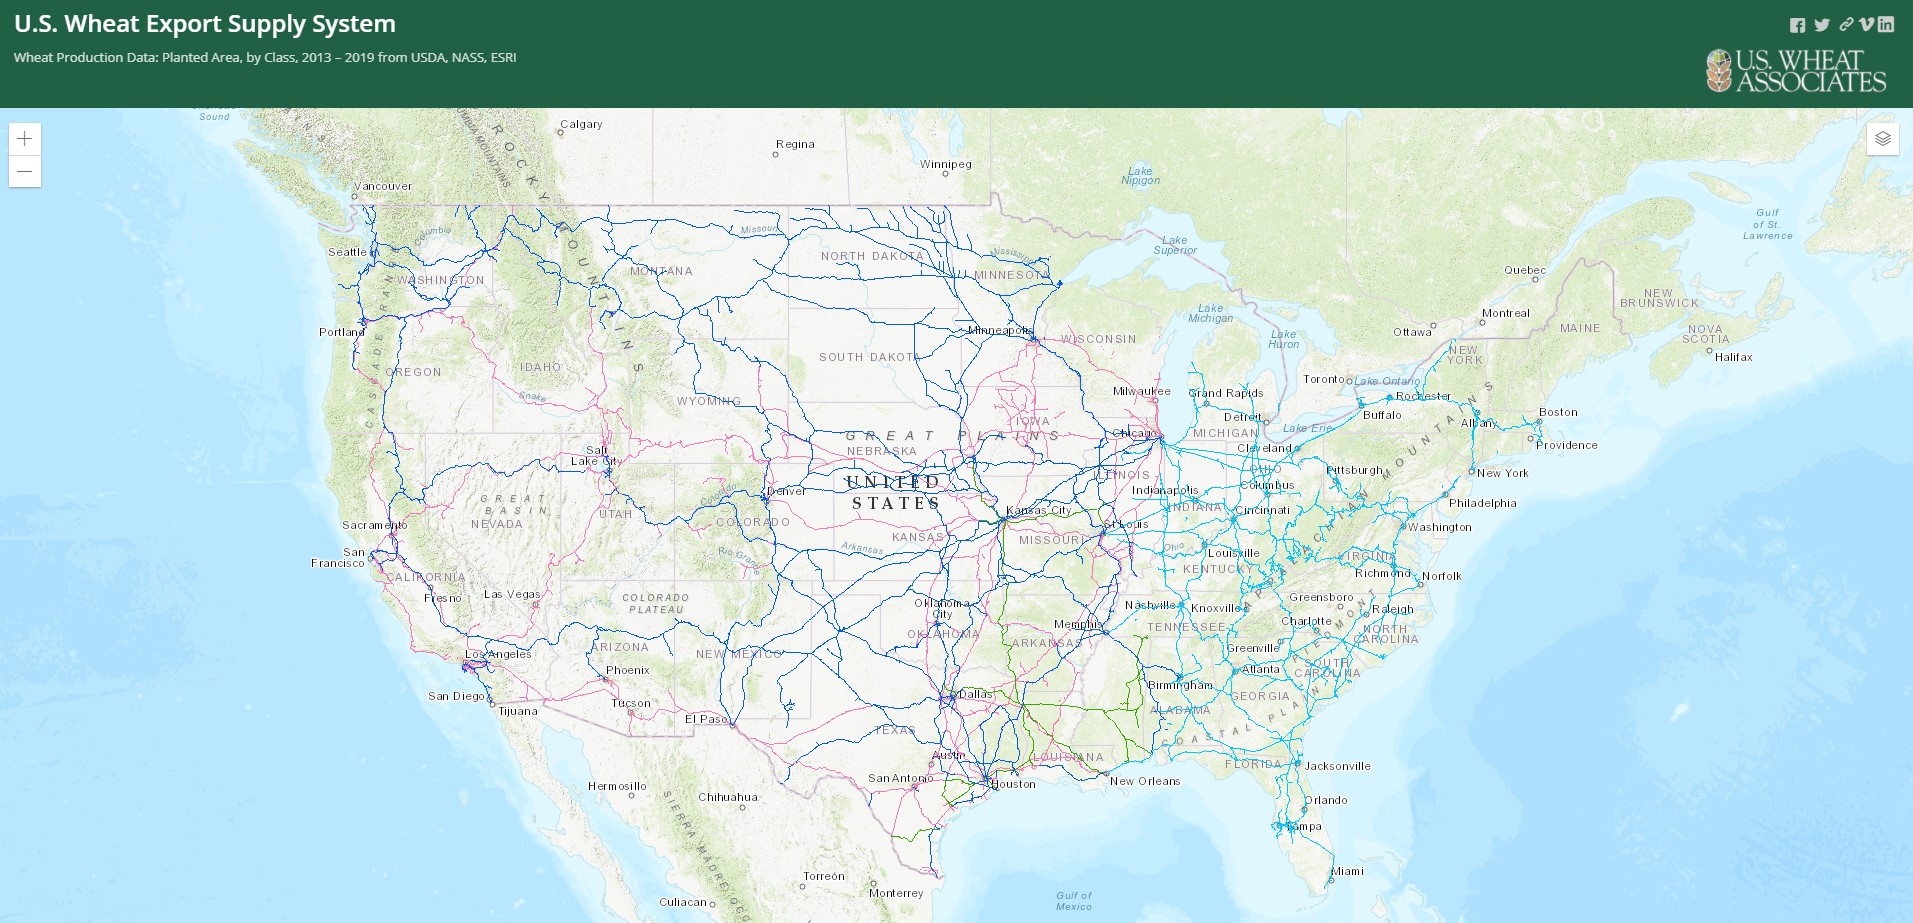 USW map of Class 1 U.S. railroads to help demonstrate rail rates.